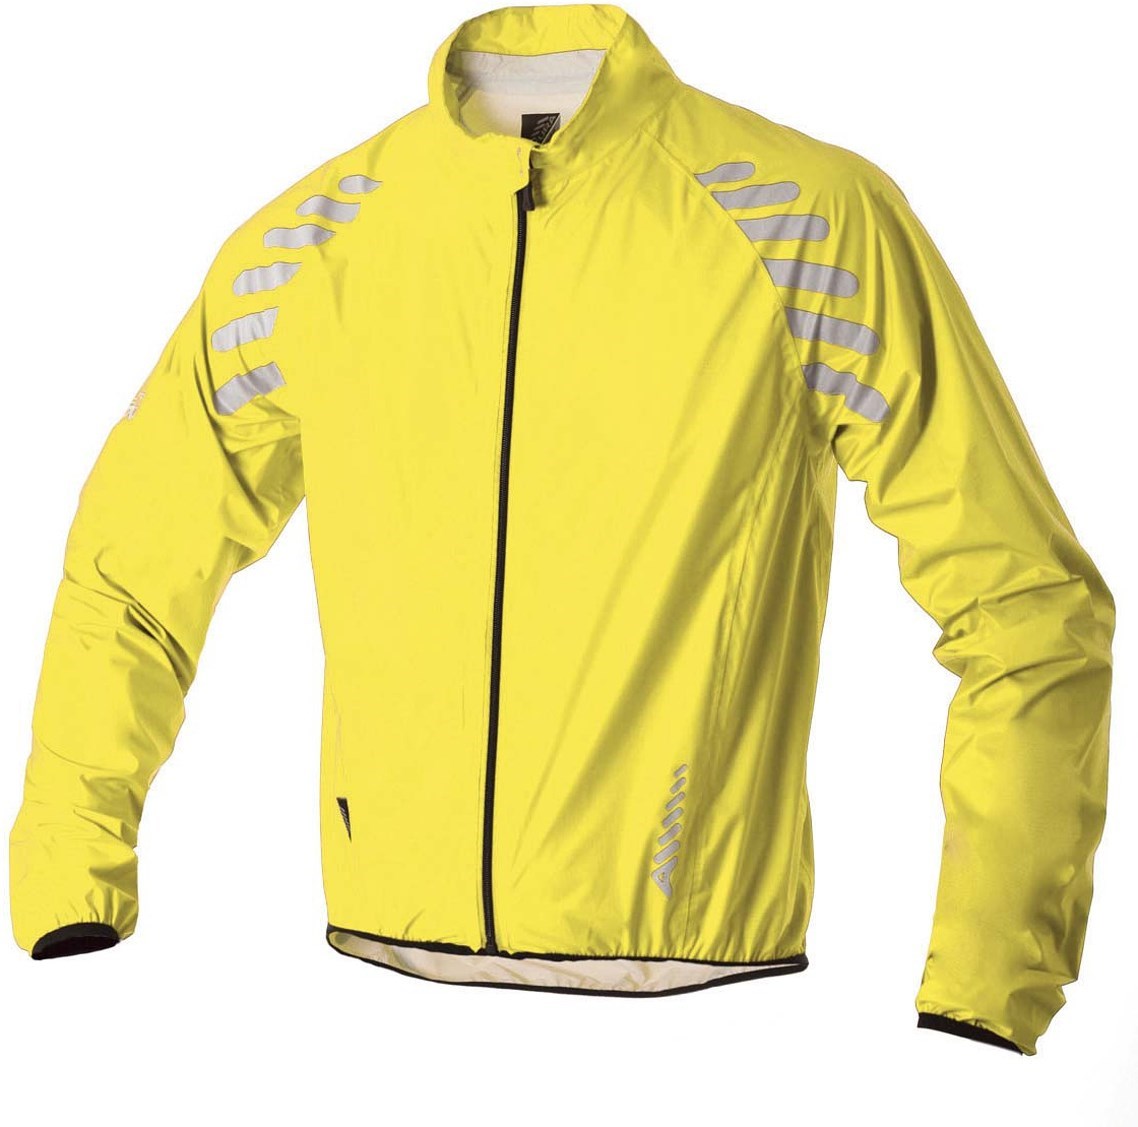 Altura Night Vision Flite Waterproof Cycling Jacket 2012 product image